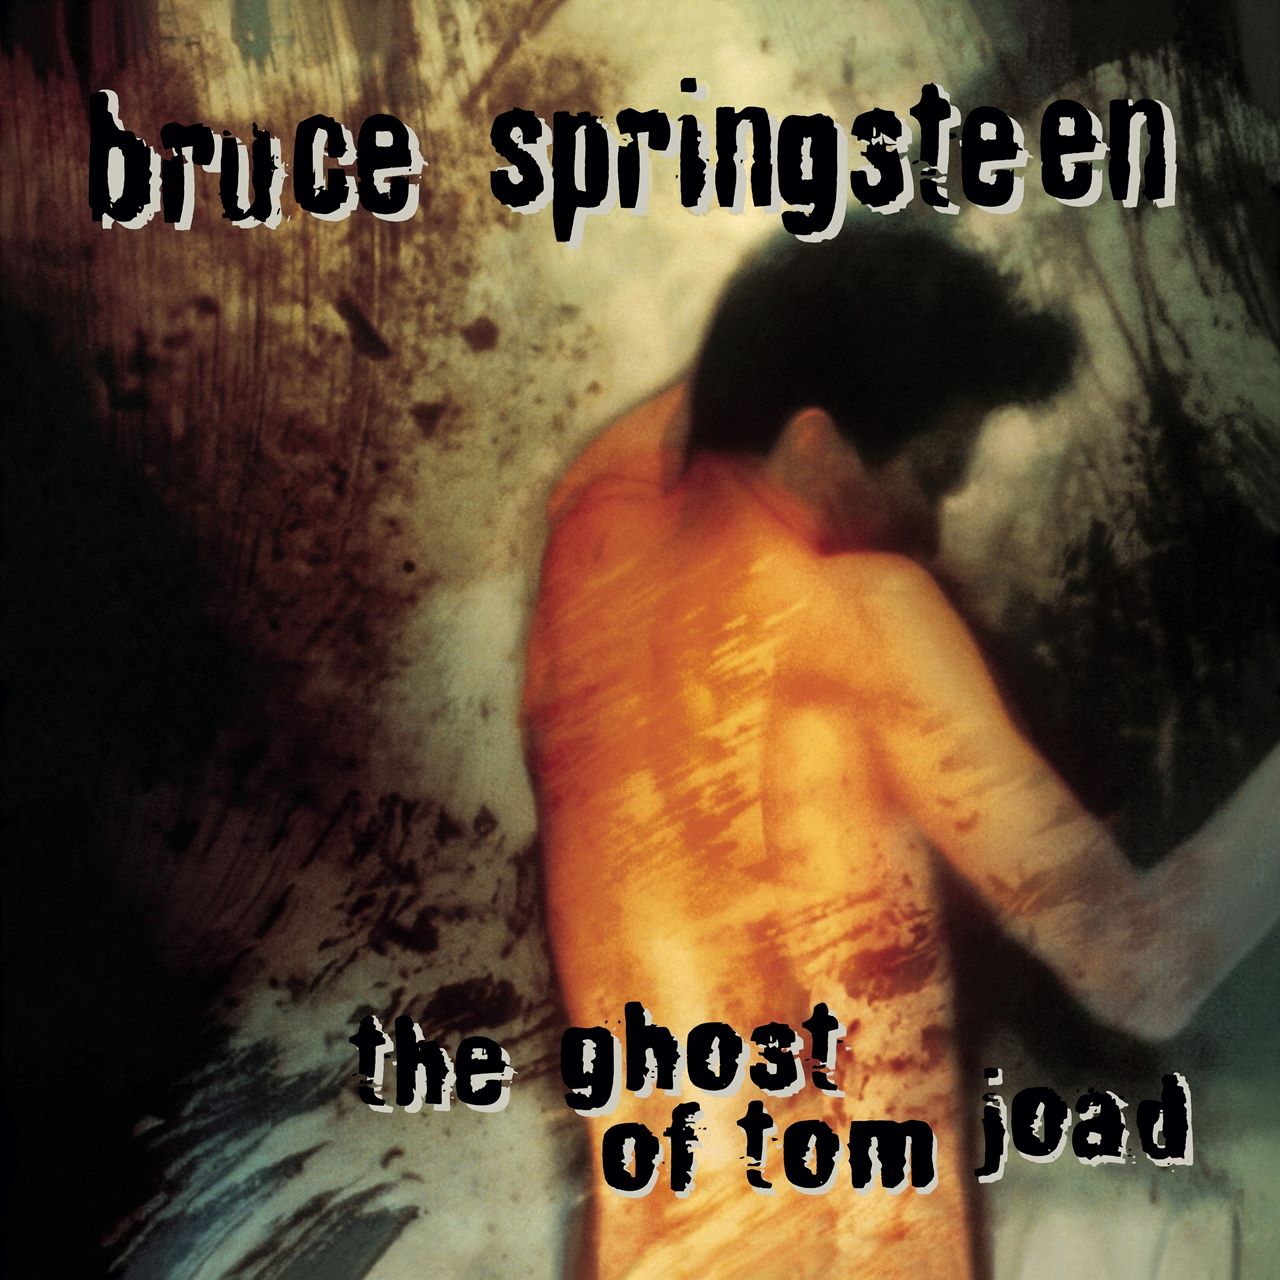 Bruce Springsteen - The Ghost Of Tom Joad cover album